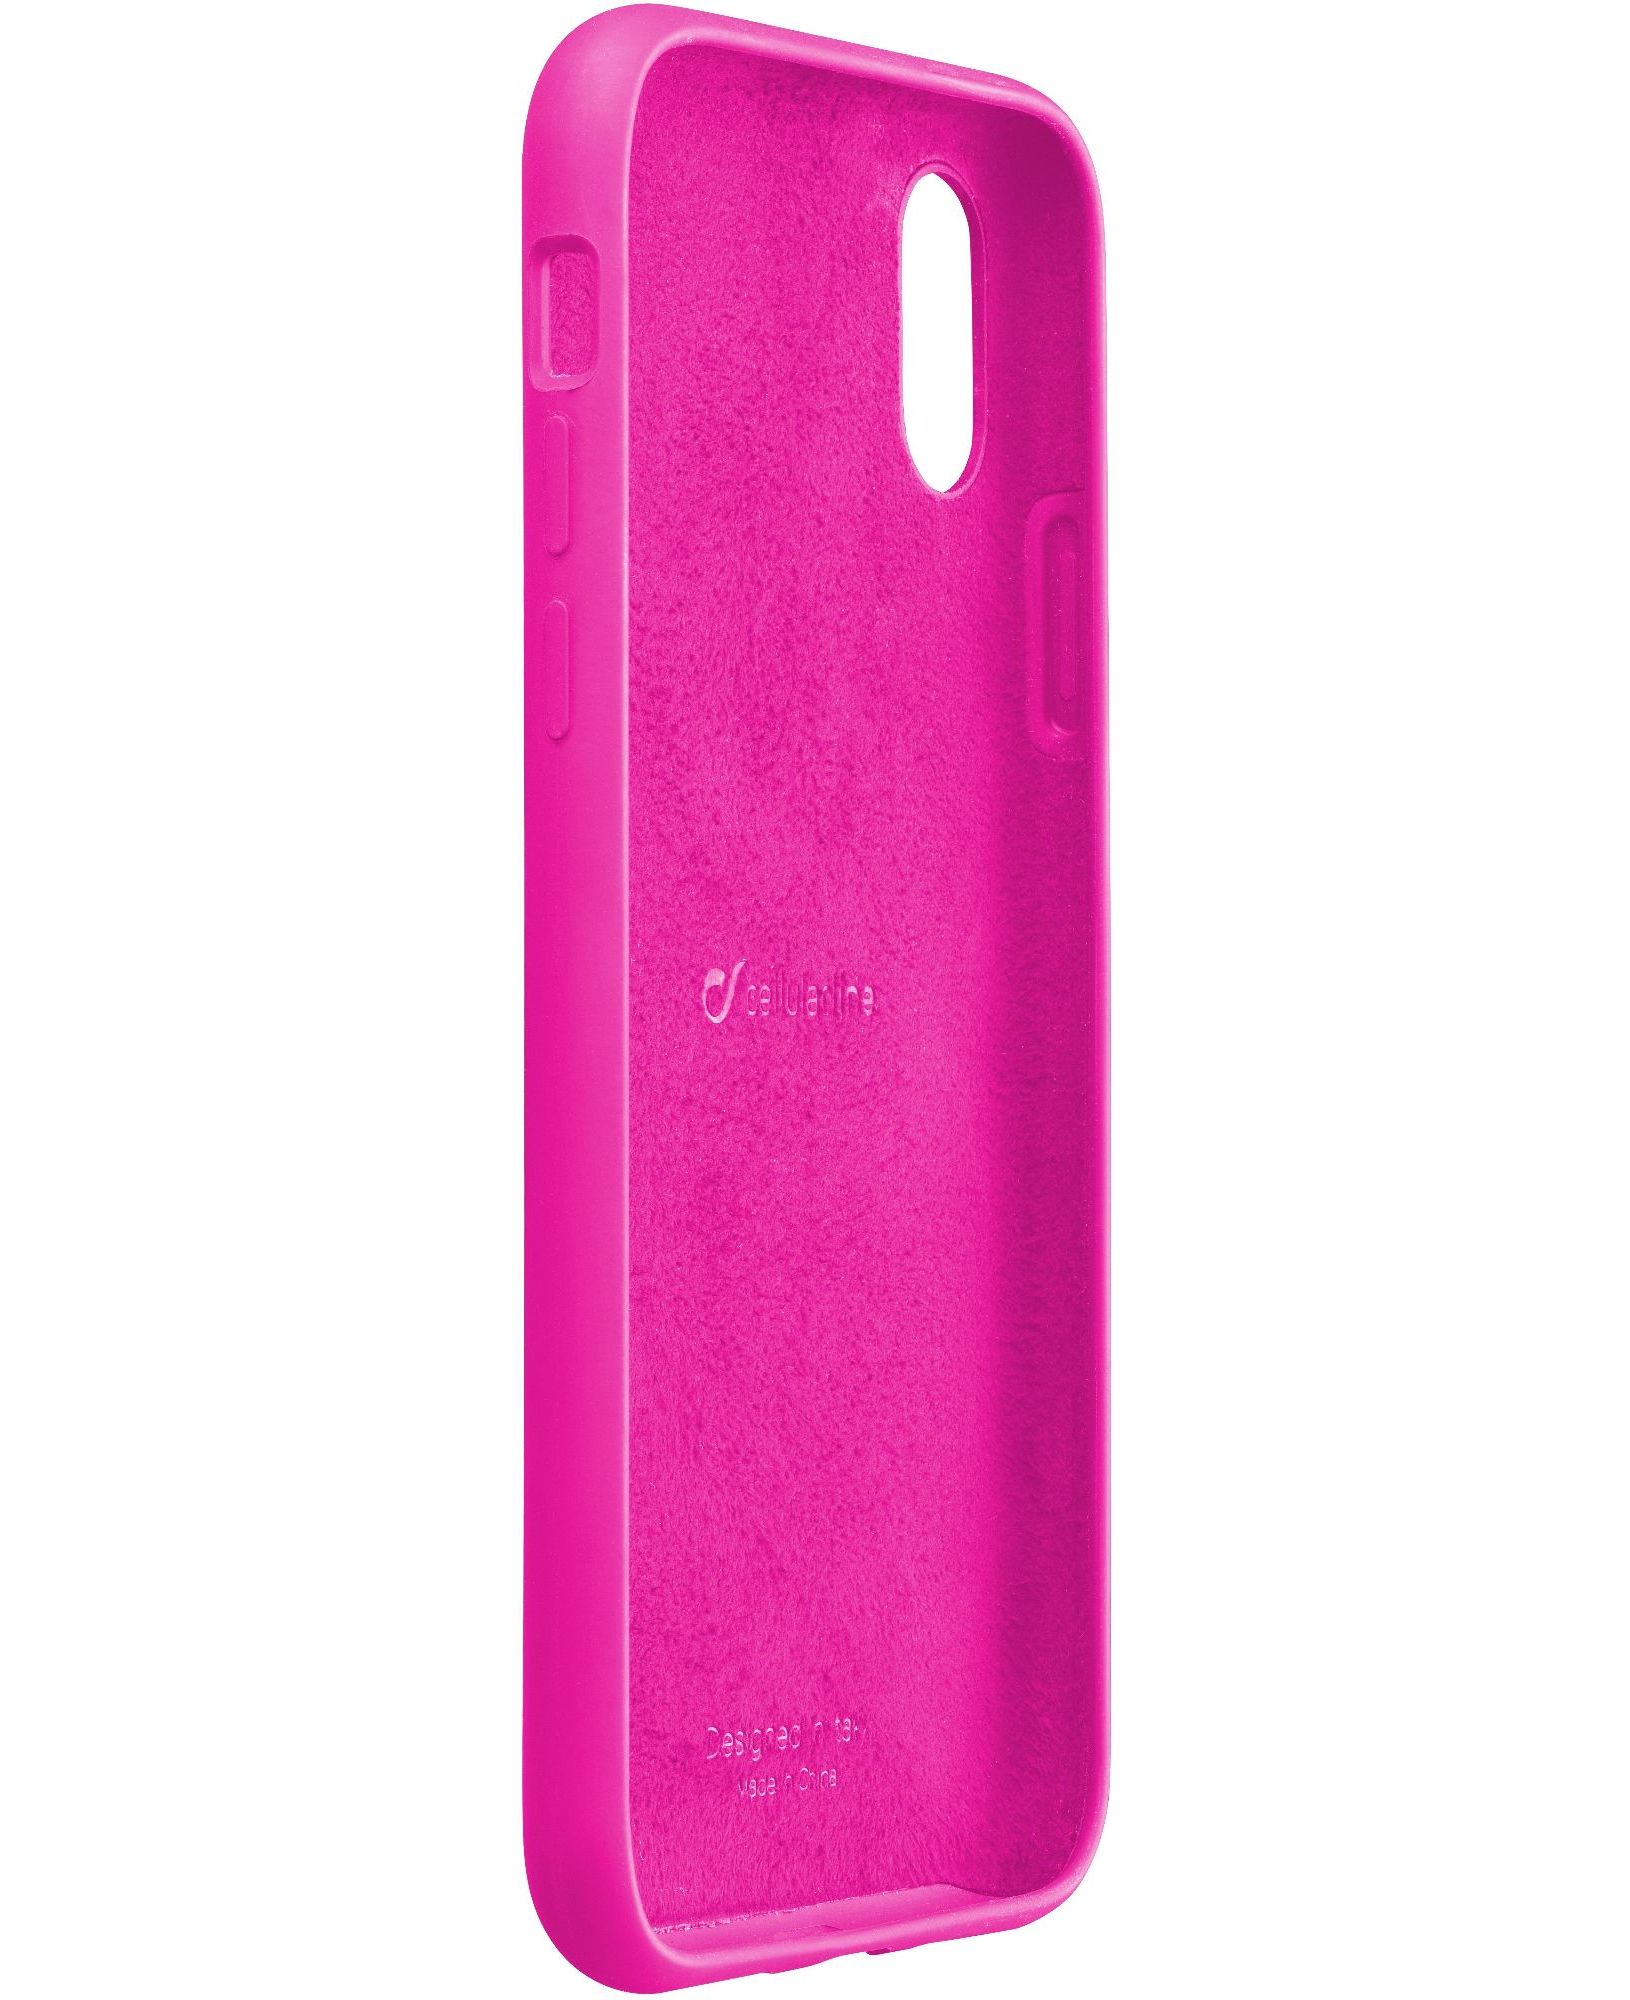 iPhone XS Max, case sensation, fuchsia fluo